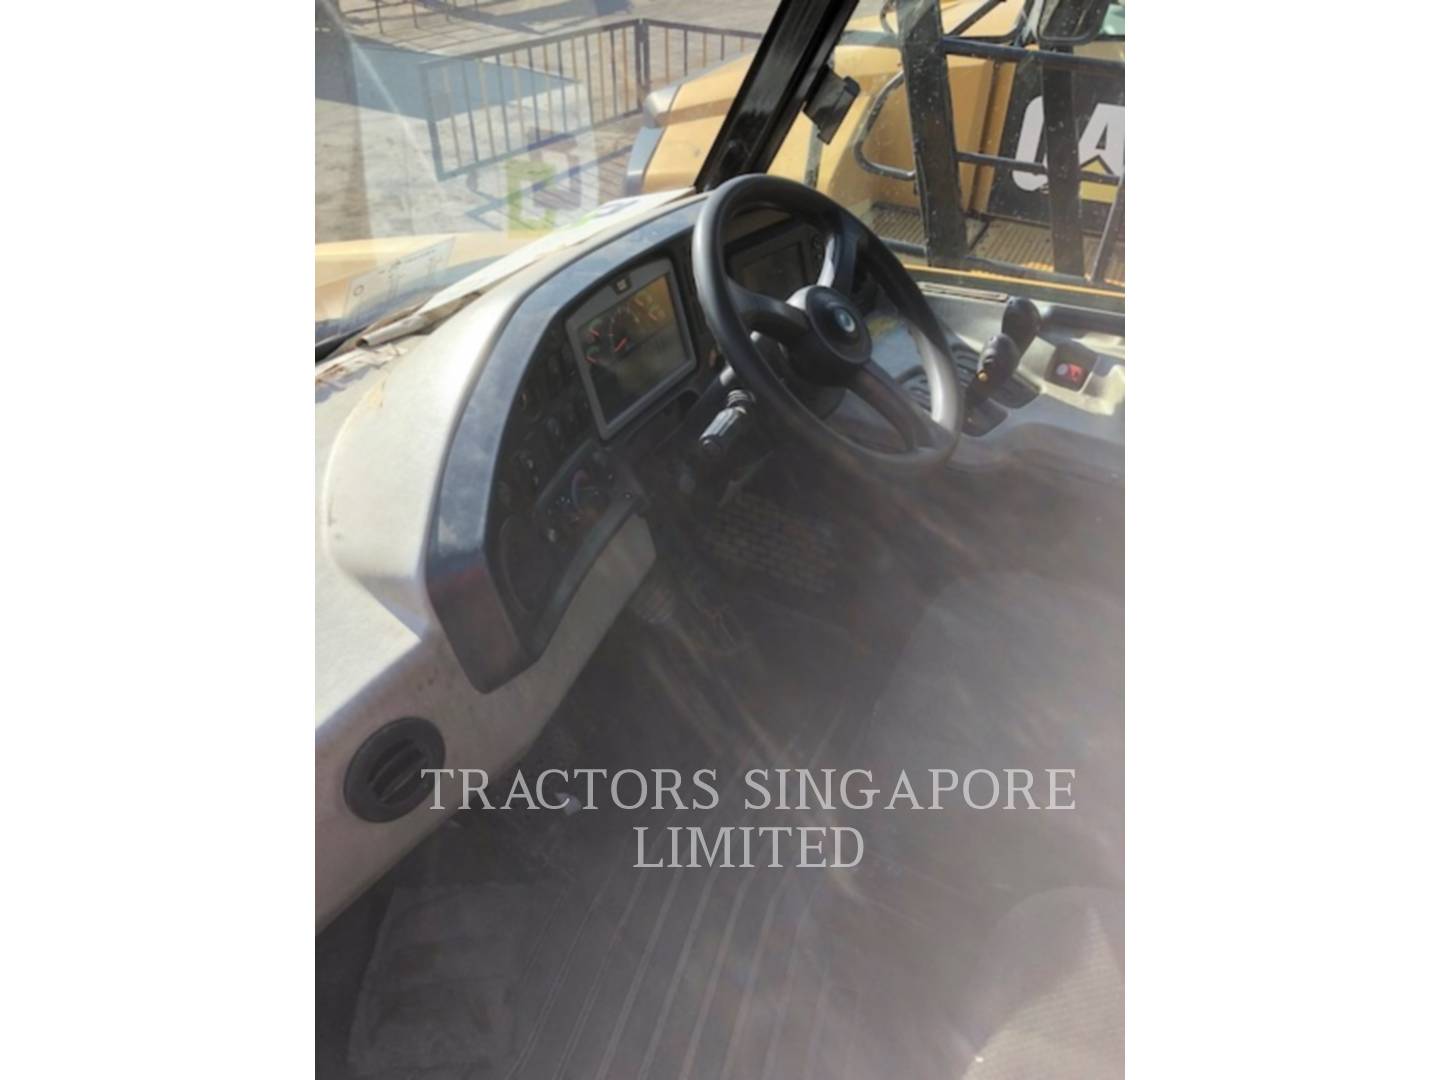 wtk?JHNyYz1hNWIwNDVjNGYzNDA0YjQyYzYzZWJmNmI3YzA3MzEyMiYkdHh0PVRSQUNUT1JTJTIwU0lOR0FQT1JFJTIwTElNSVRFRCY0Mzg3 745C | Tractors Singapore